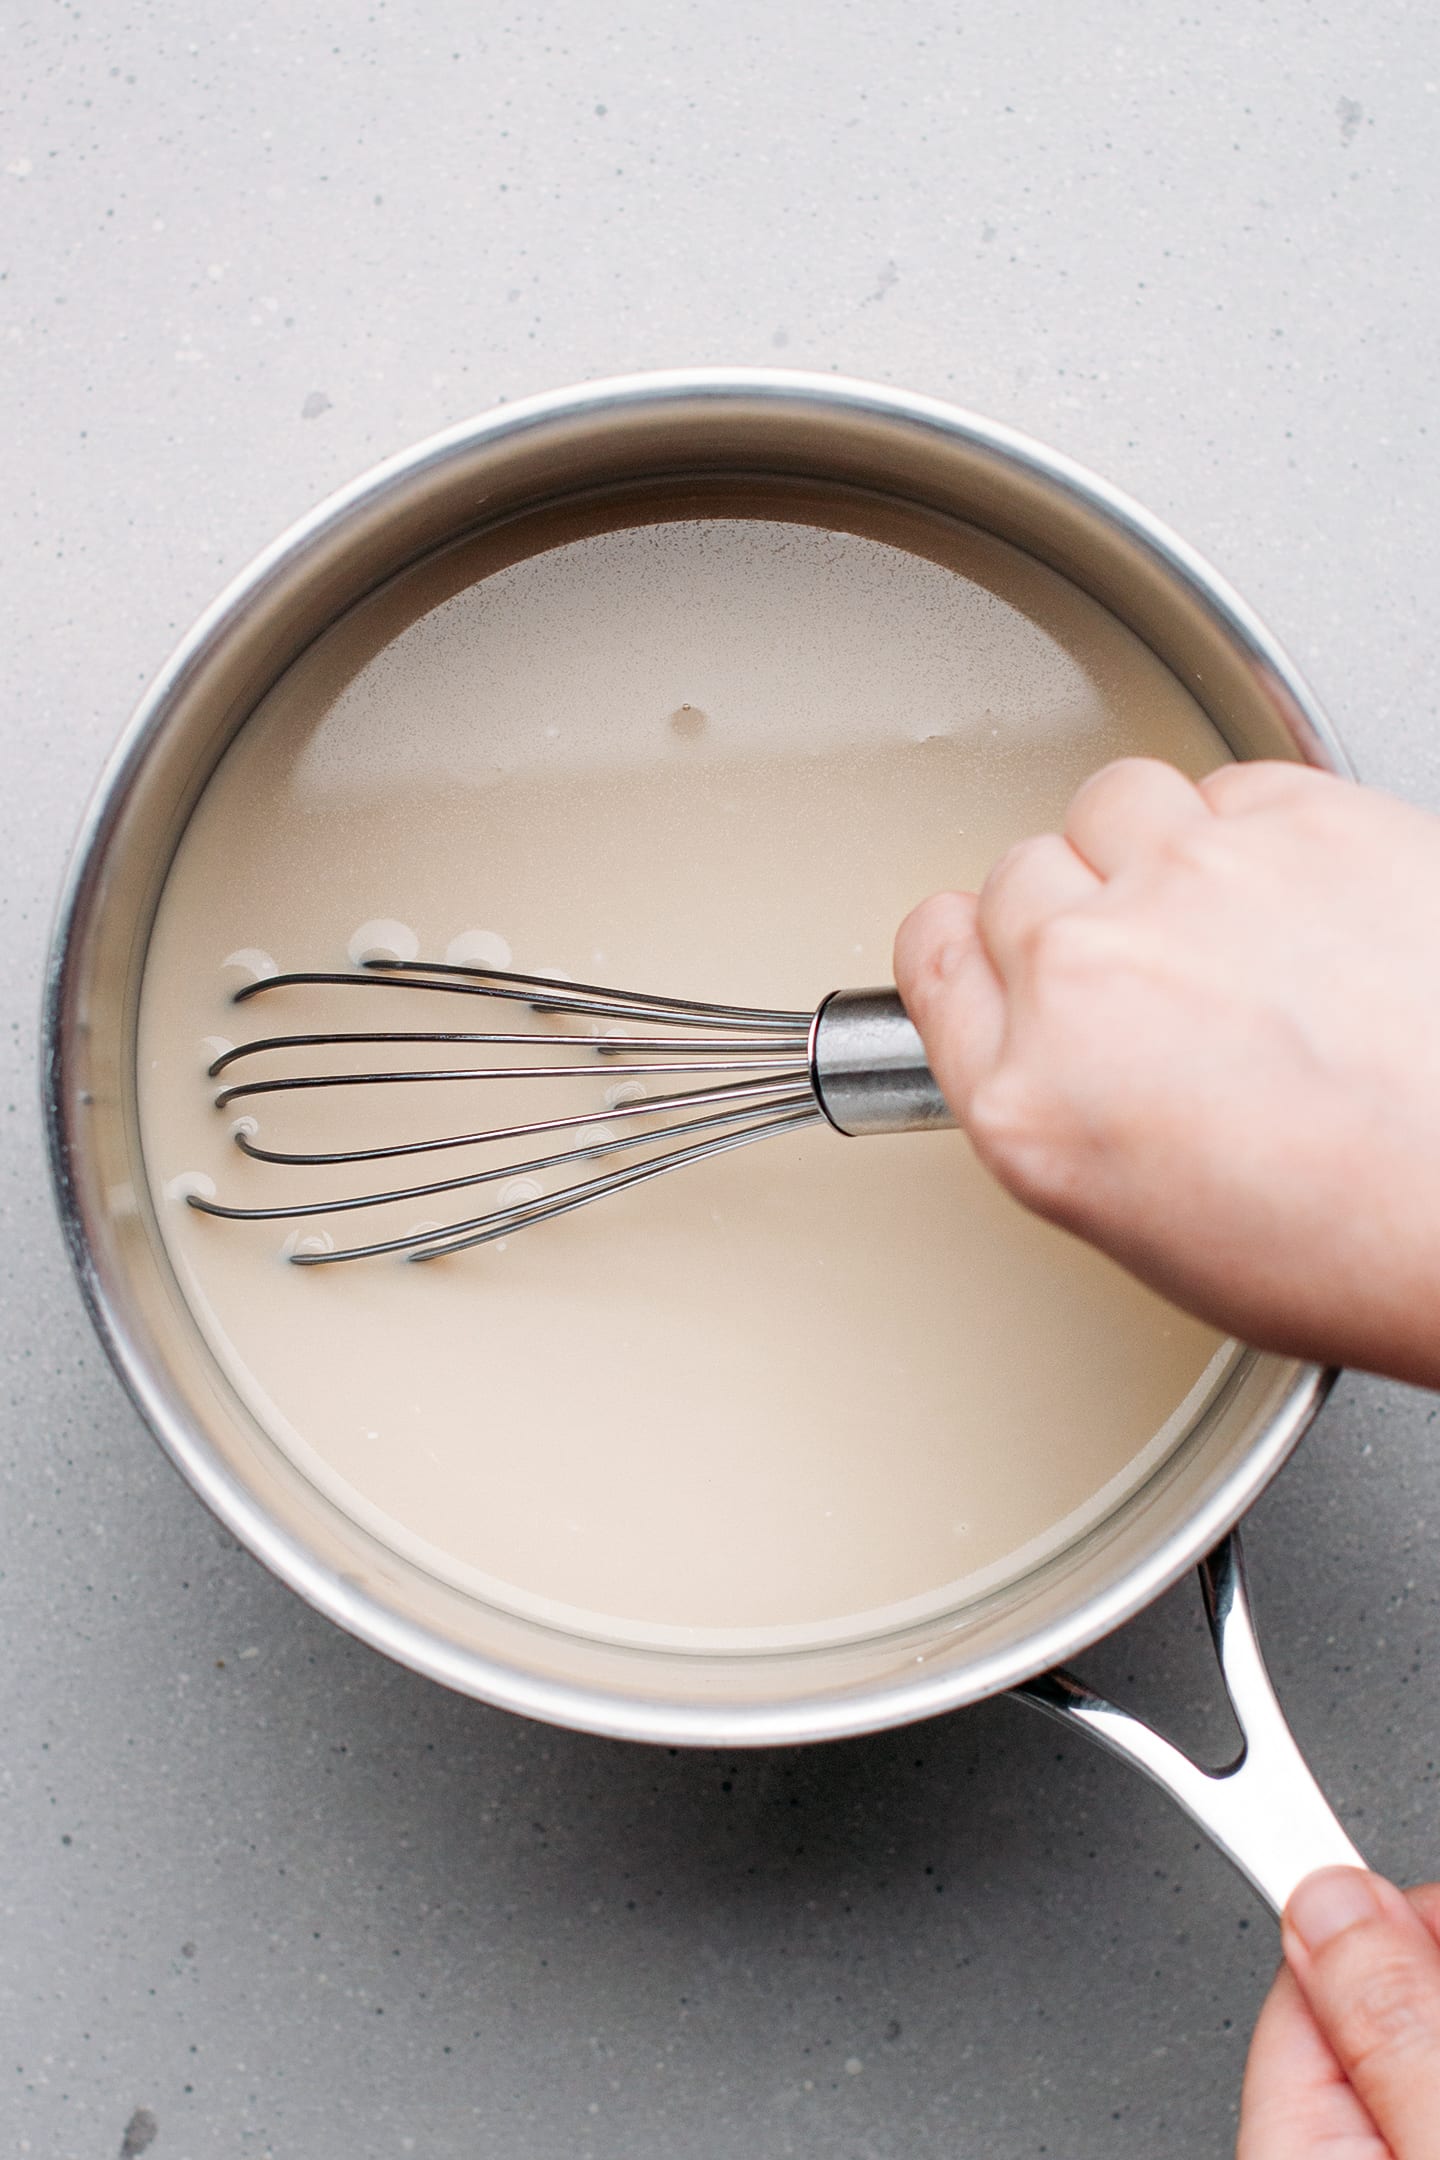 Whisking almond milk and cornstarch in a saucepan.